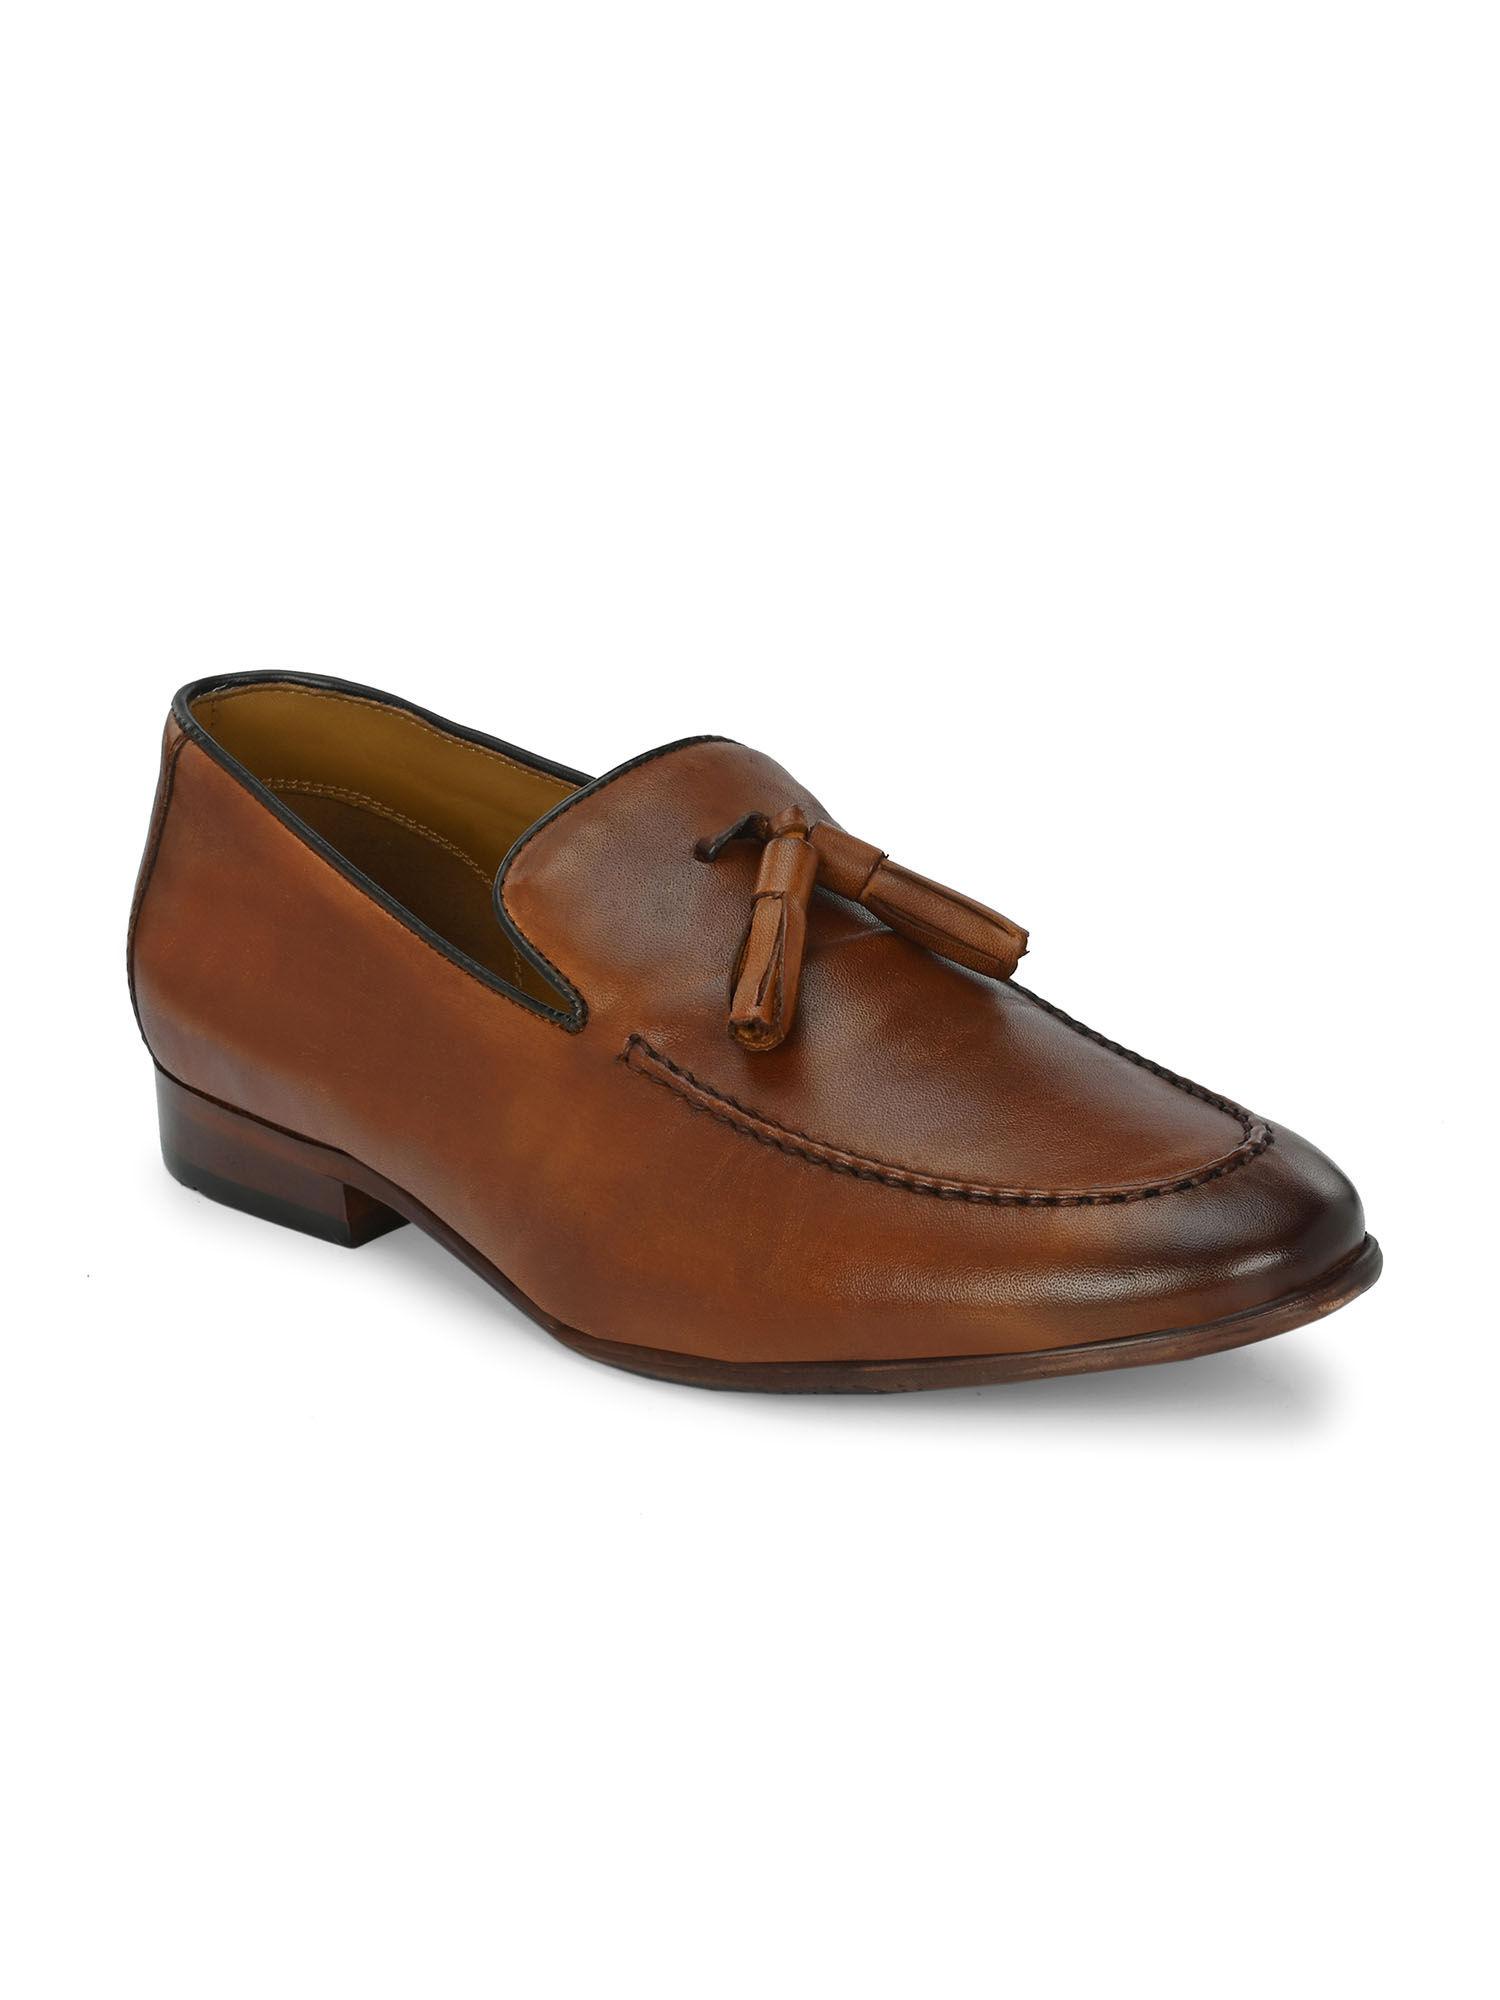 genuine-leather-683-tan-tassel-loafers-for-men